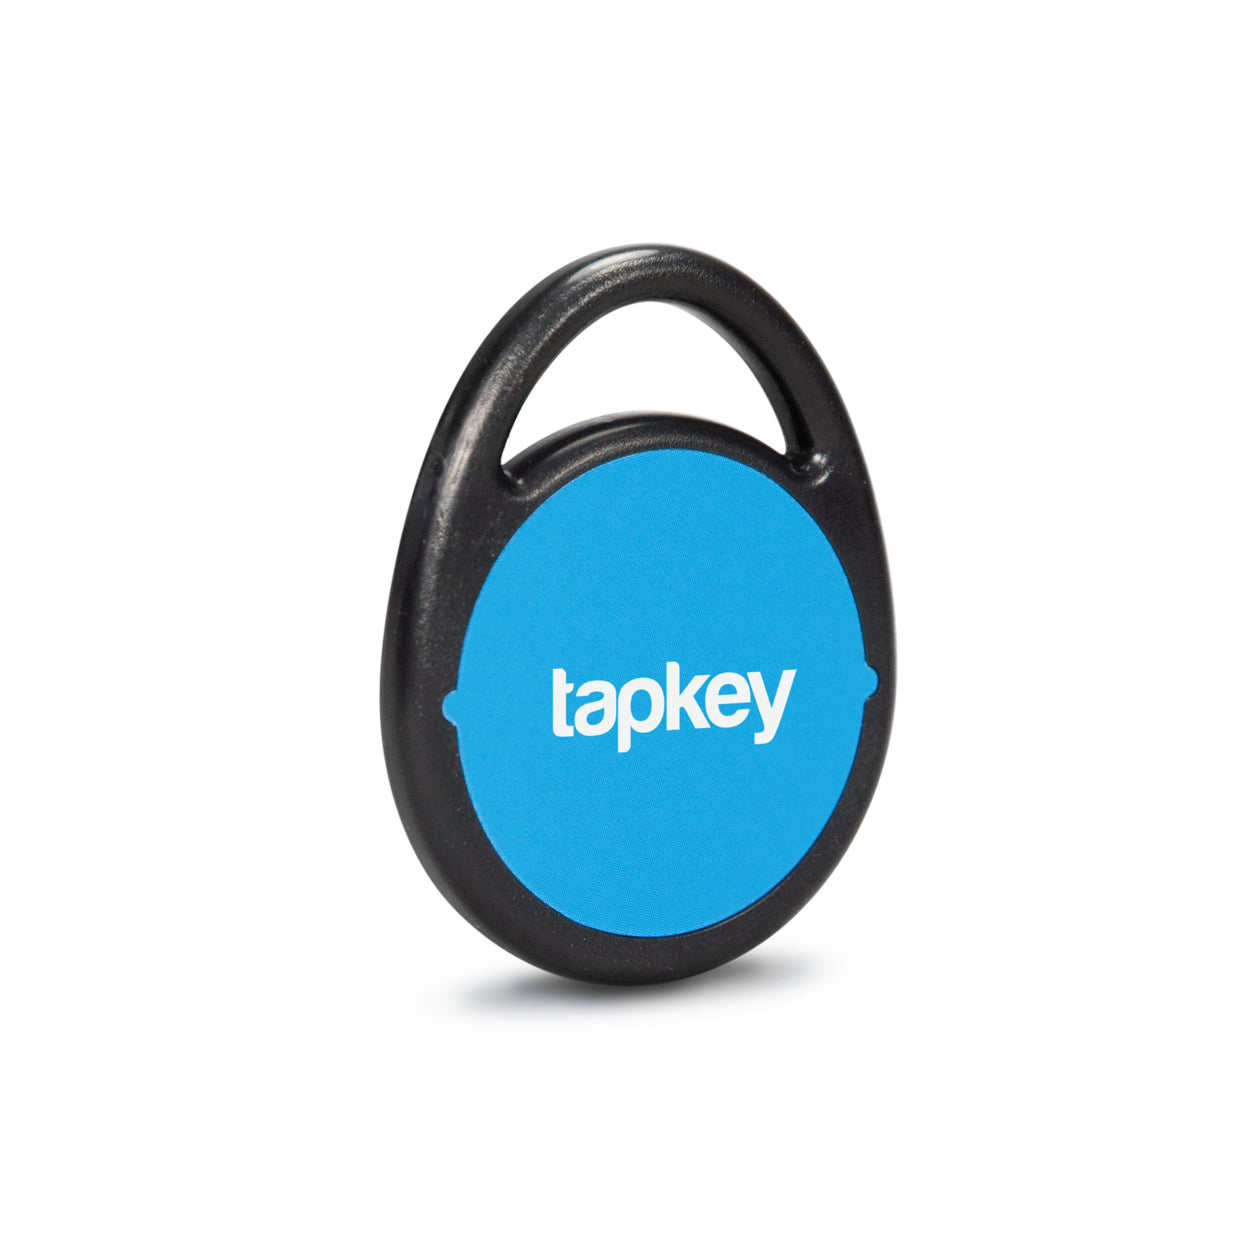 NFC Tag – Tapkey Online Store